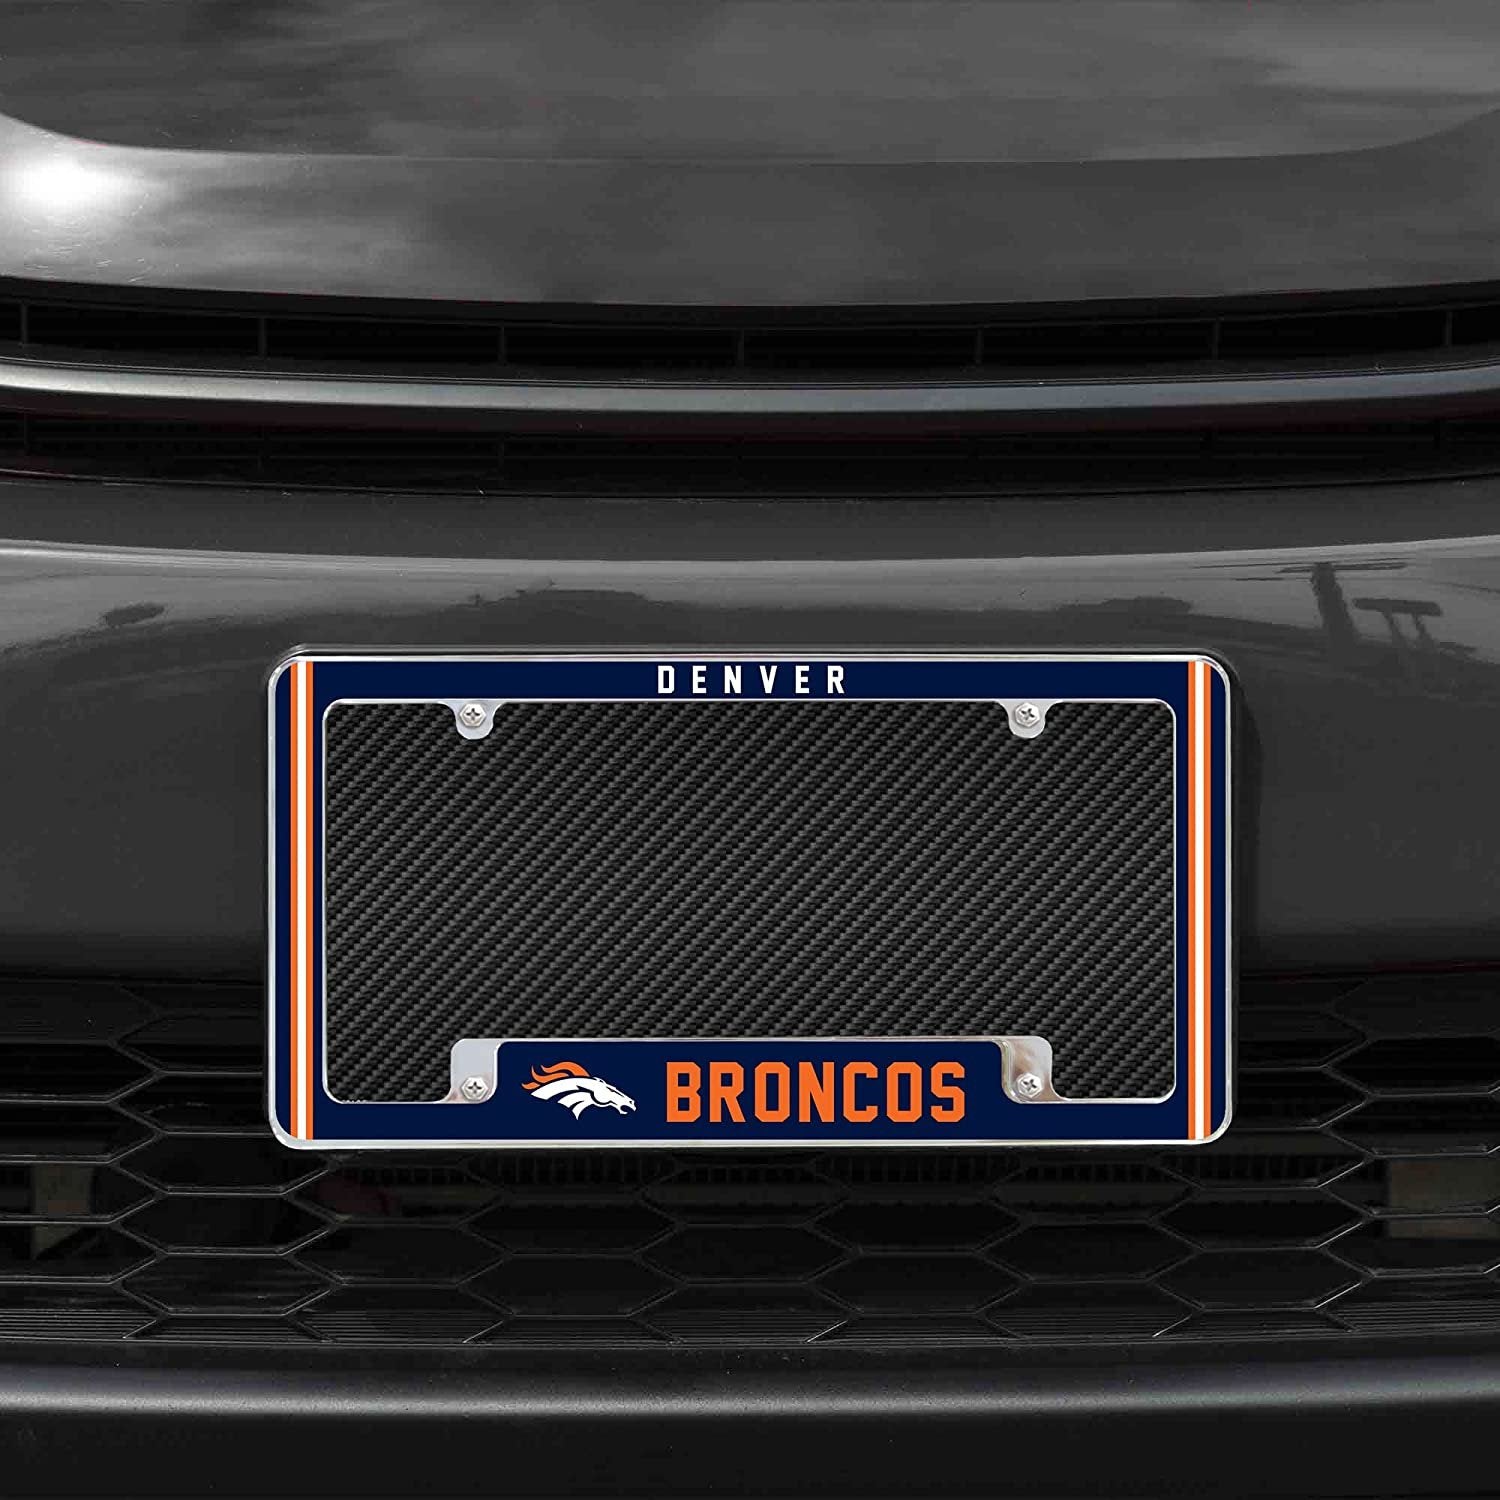 Denver Broncos Metal License Plate Frame Chrome Tag Cover Alternate Design 6x12 Inch